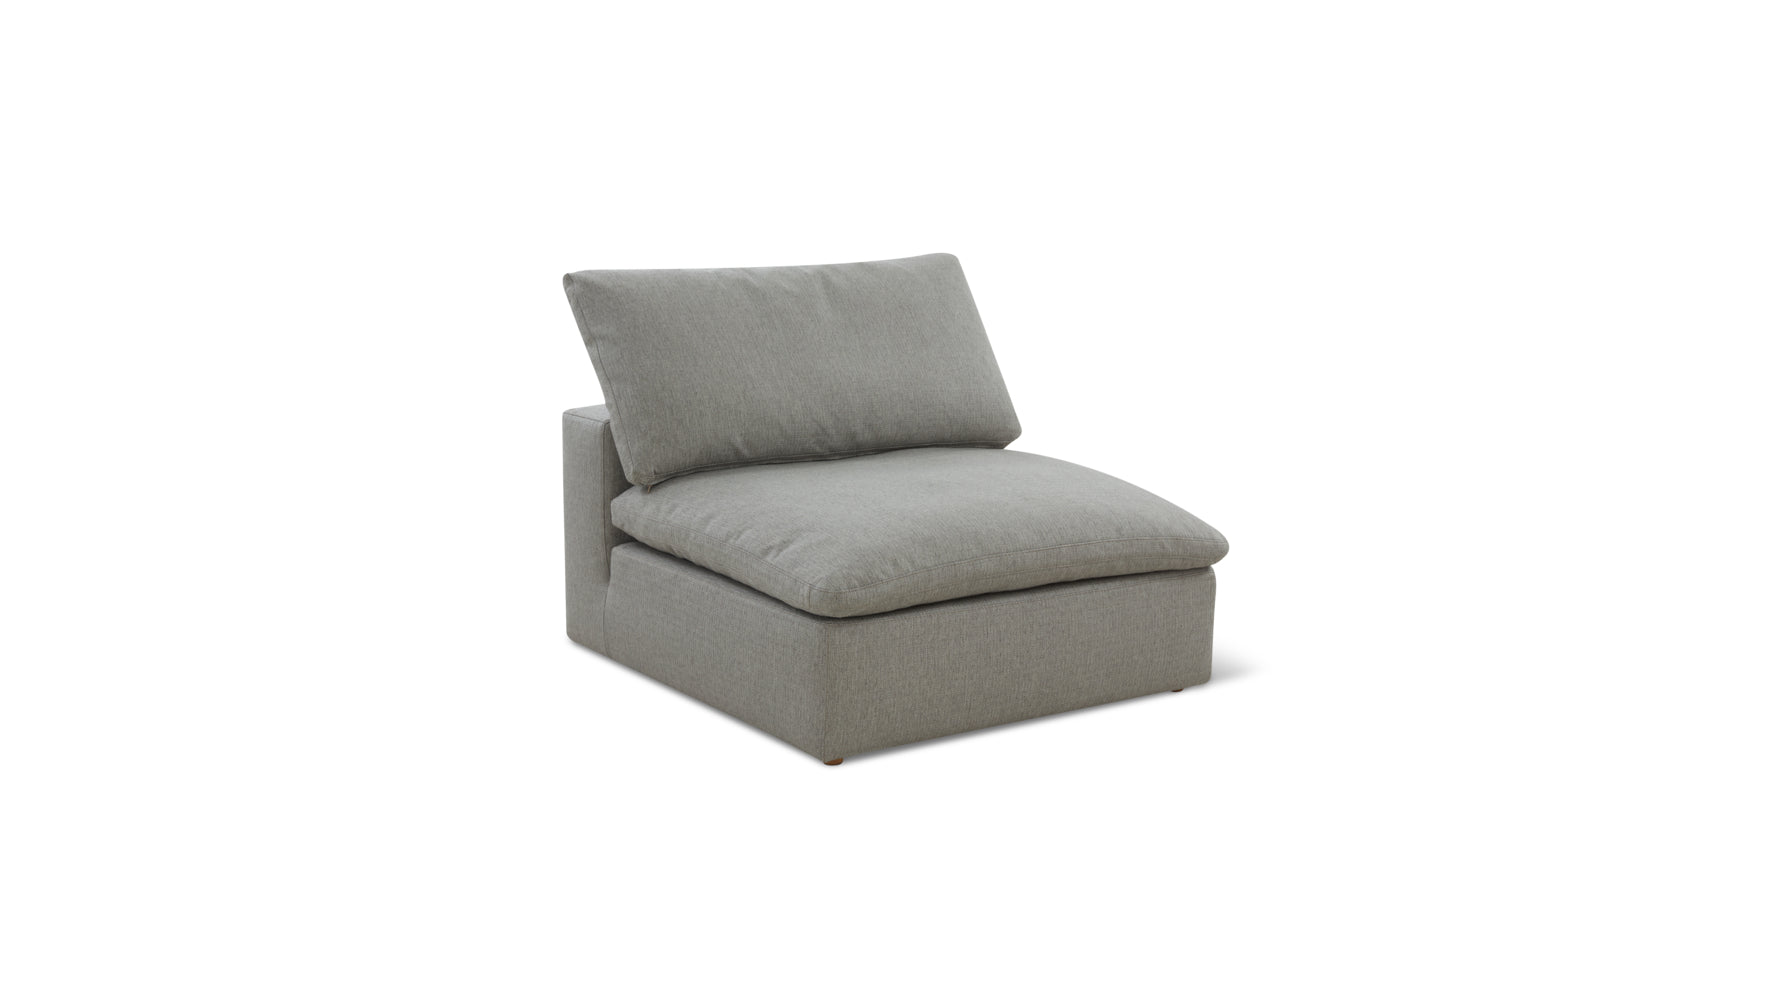 Movie Night™ Armless Chair, Standard, Mist - Image 5